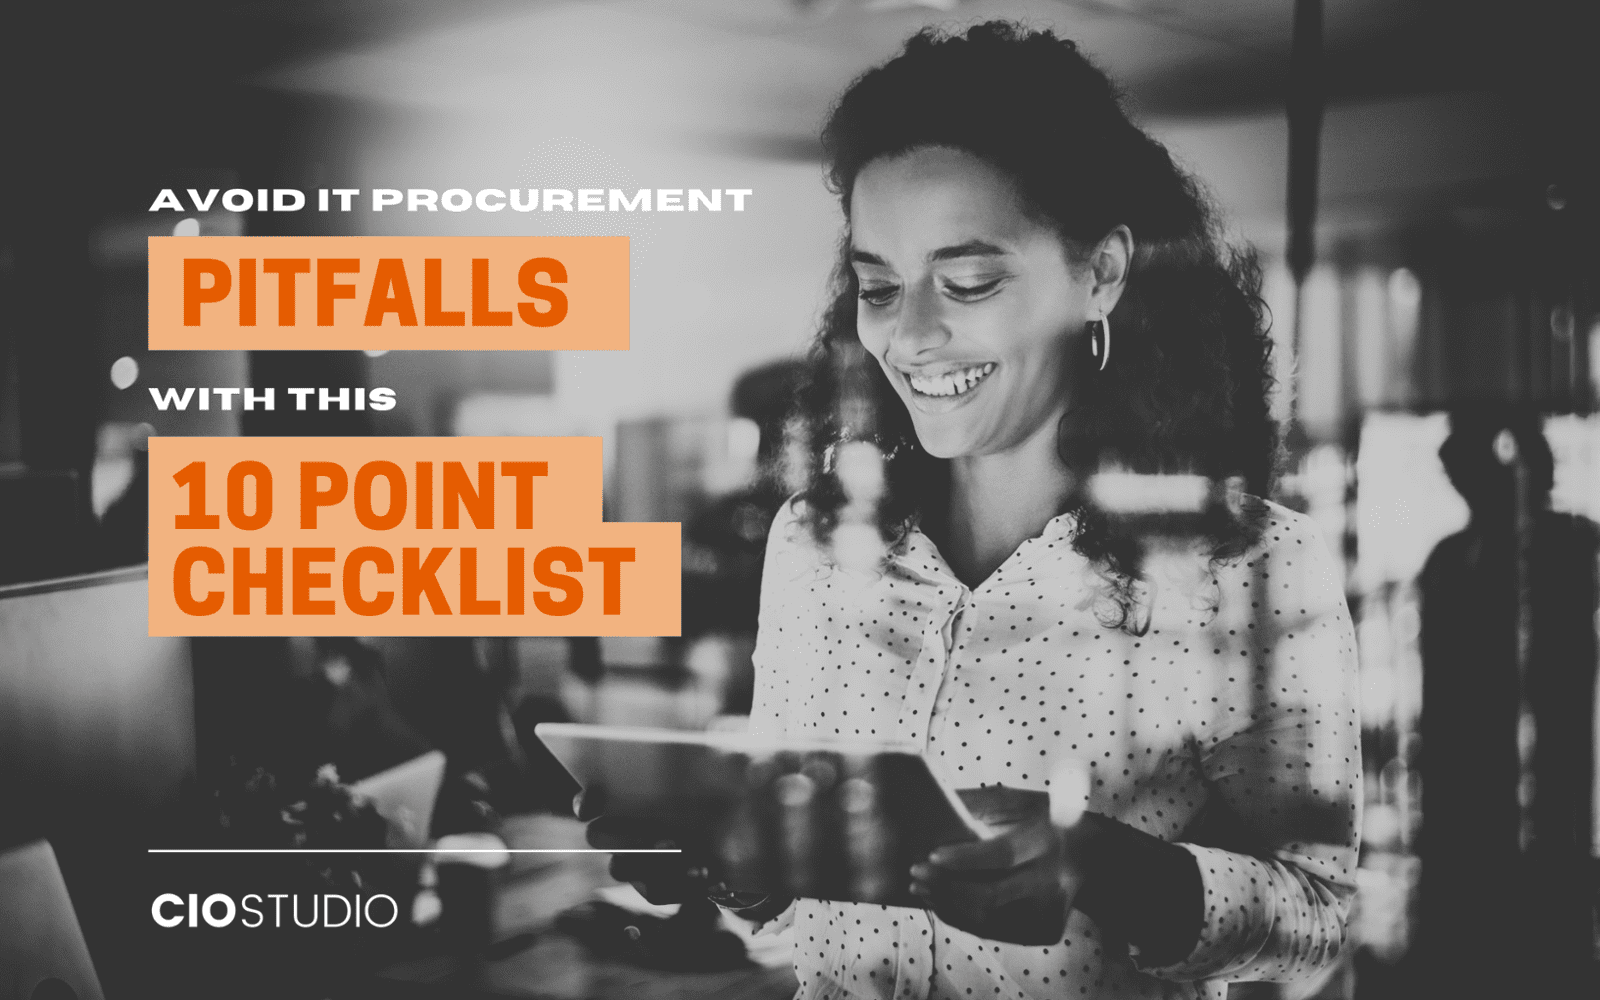 10-point checklist to avoid IT procurement pitfalls 